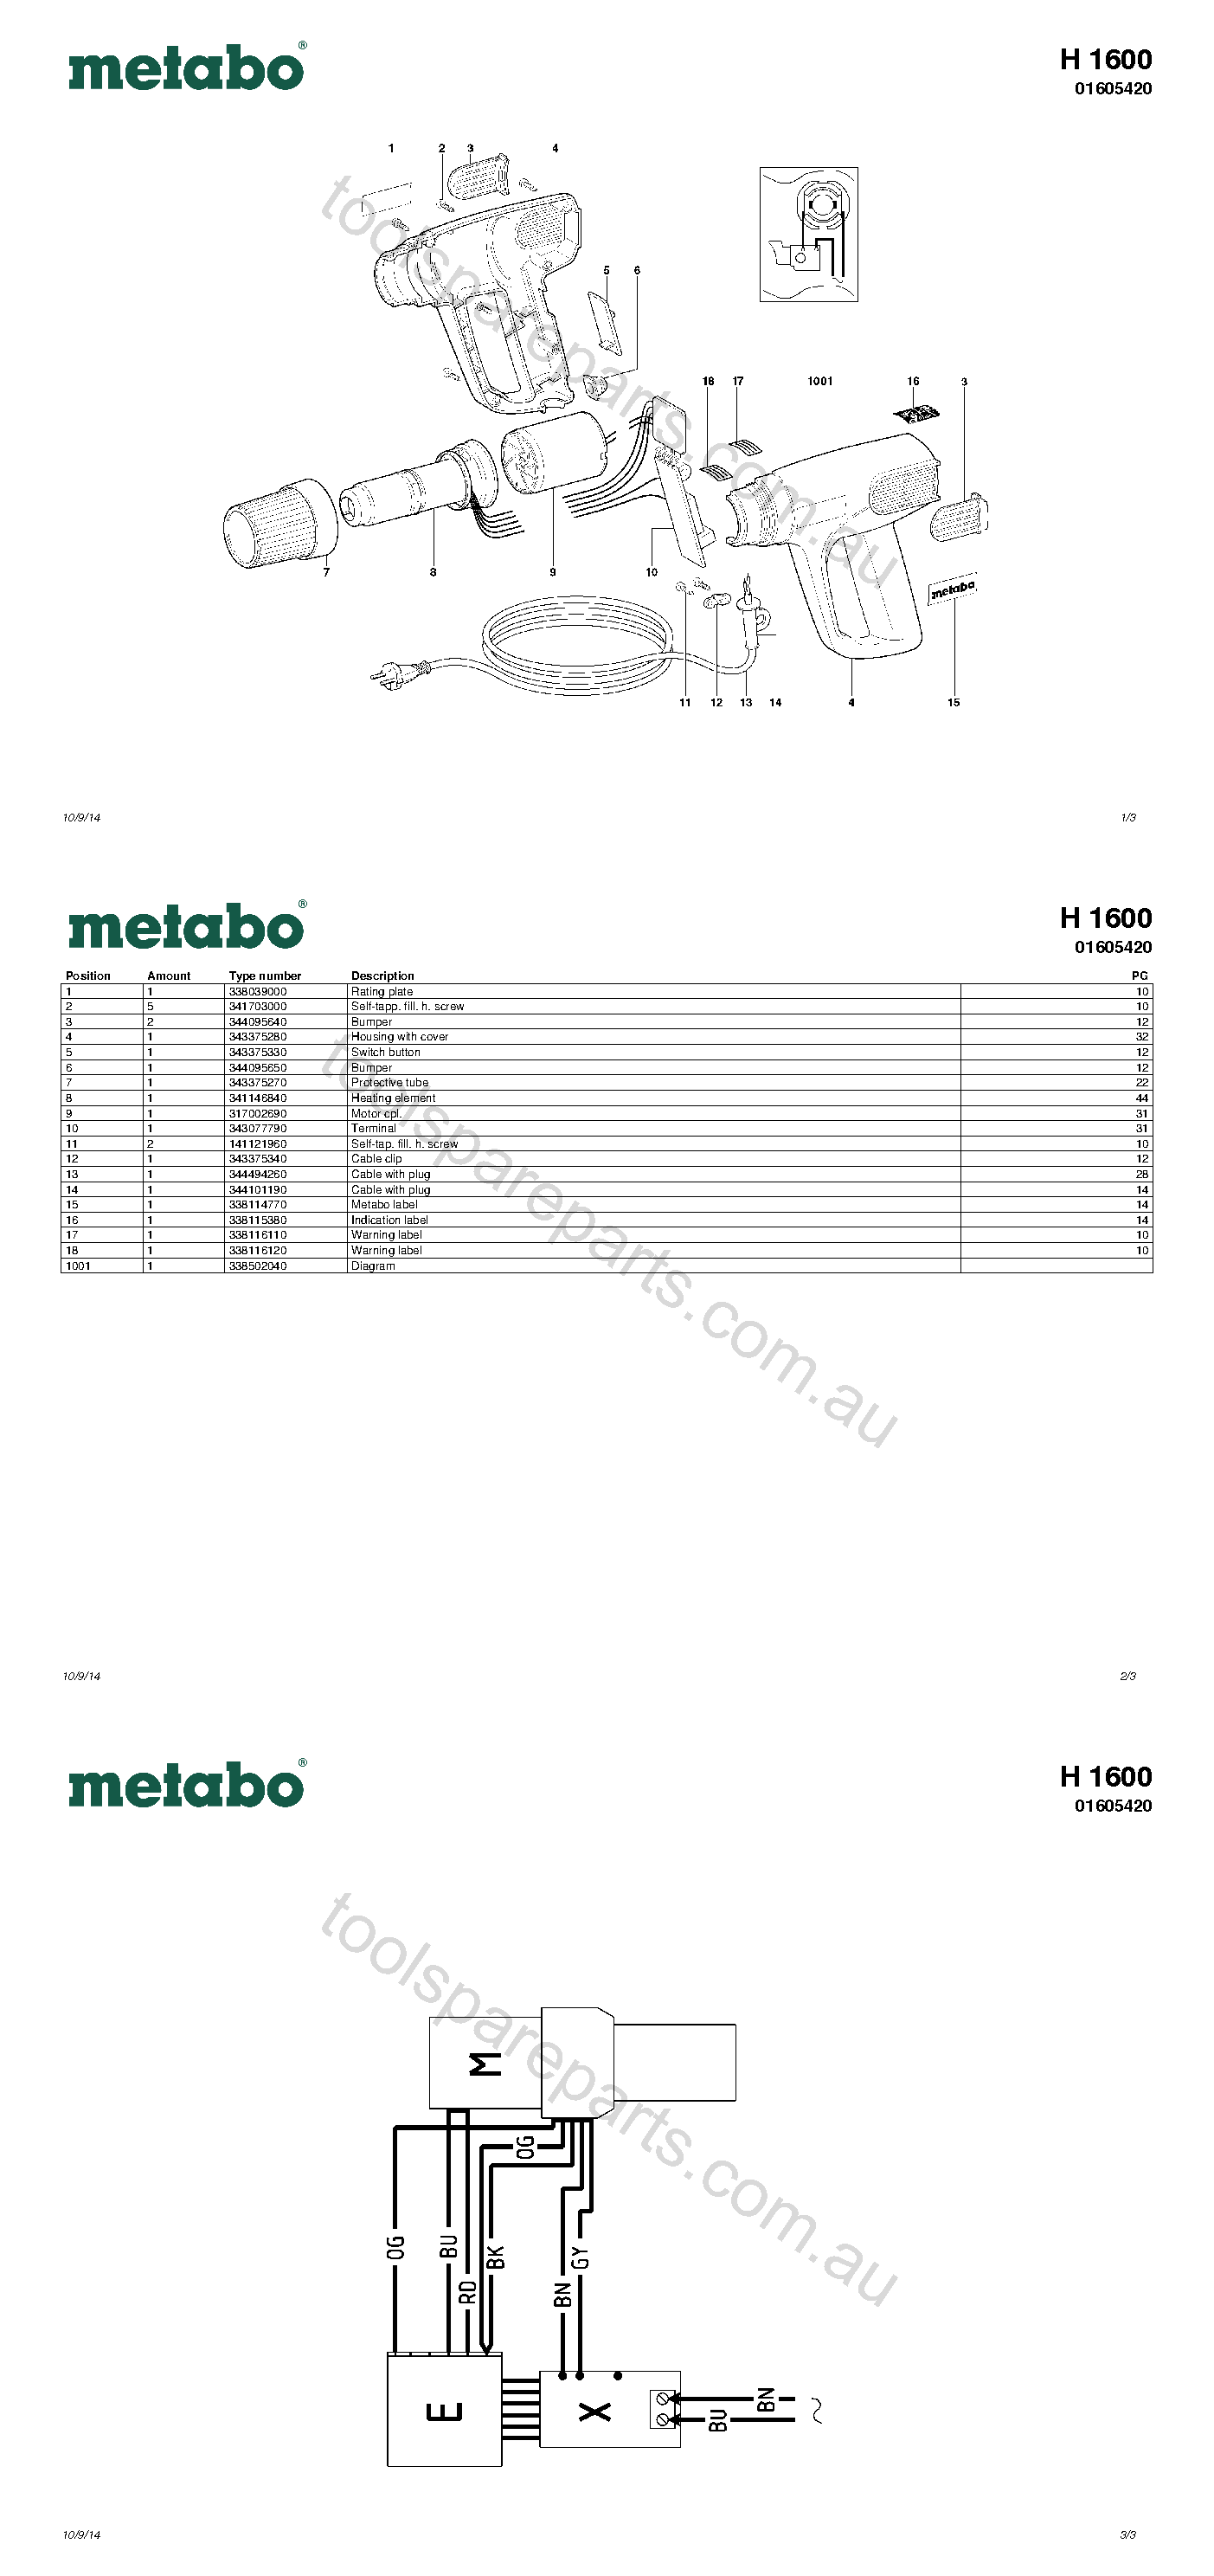 Metabo H 1600 01605420  Diagram 1